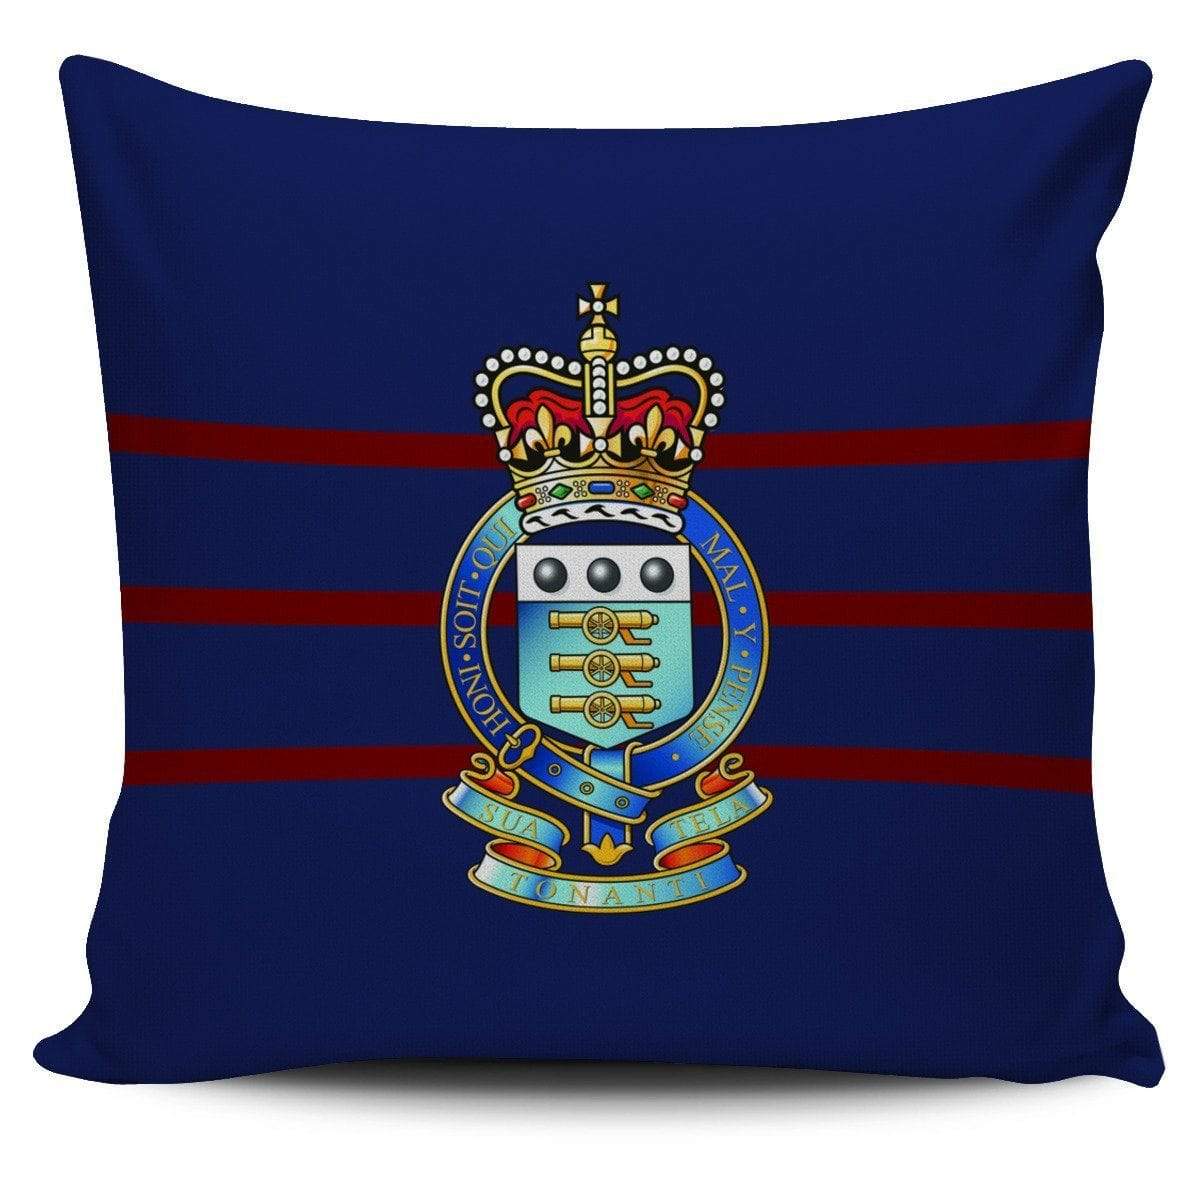 cushion cover RAOC Royal Army Ordnance Corps Cushion Cover